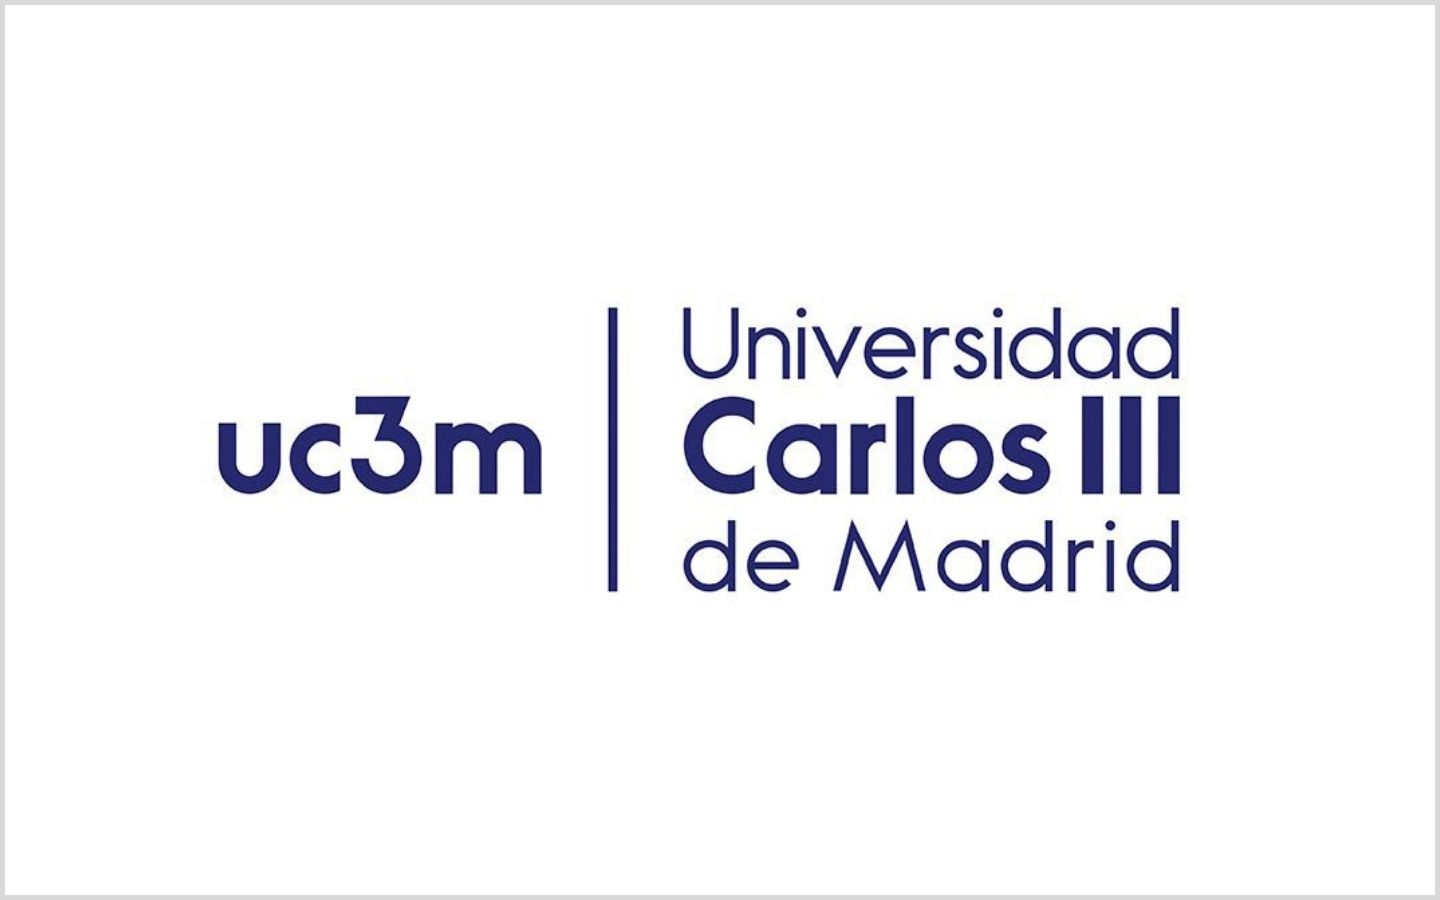 Carlos III University of Madrid Logo